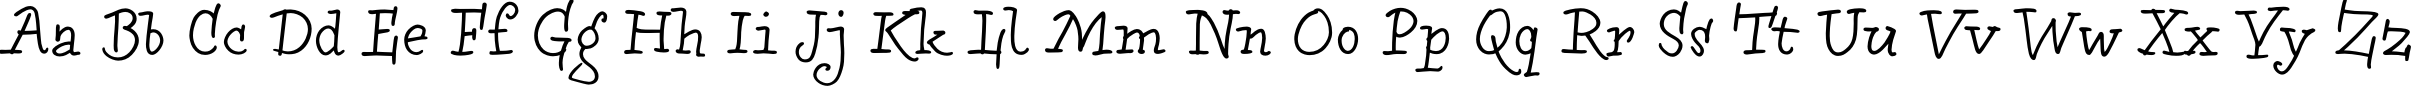 Пример написания английского алфавита шрифтом Bowman